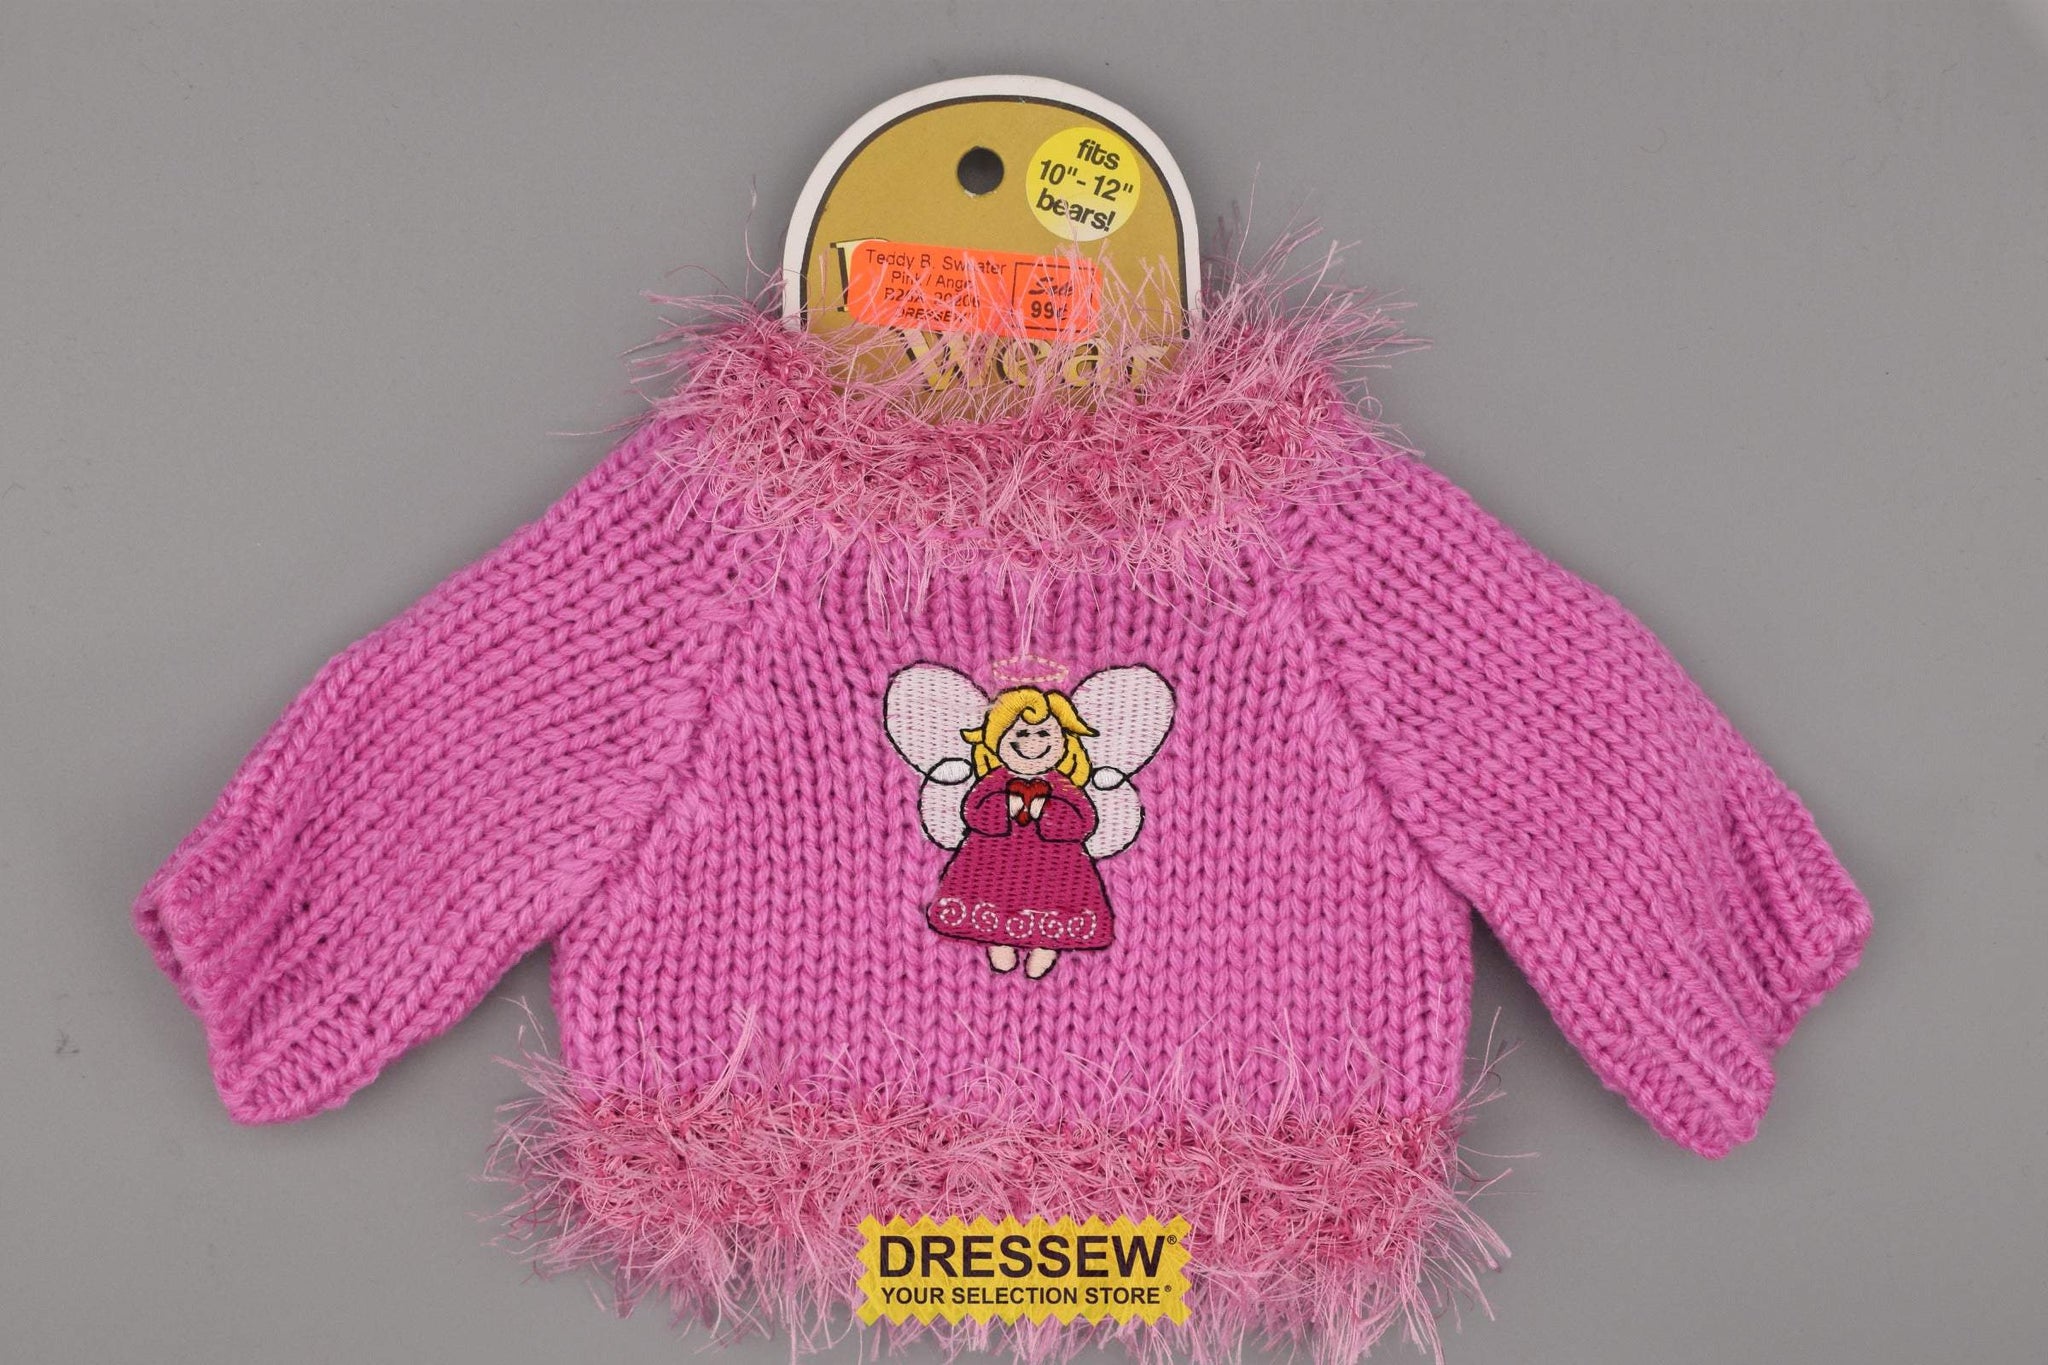 Teddy Bear Sweater Pink / Angel